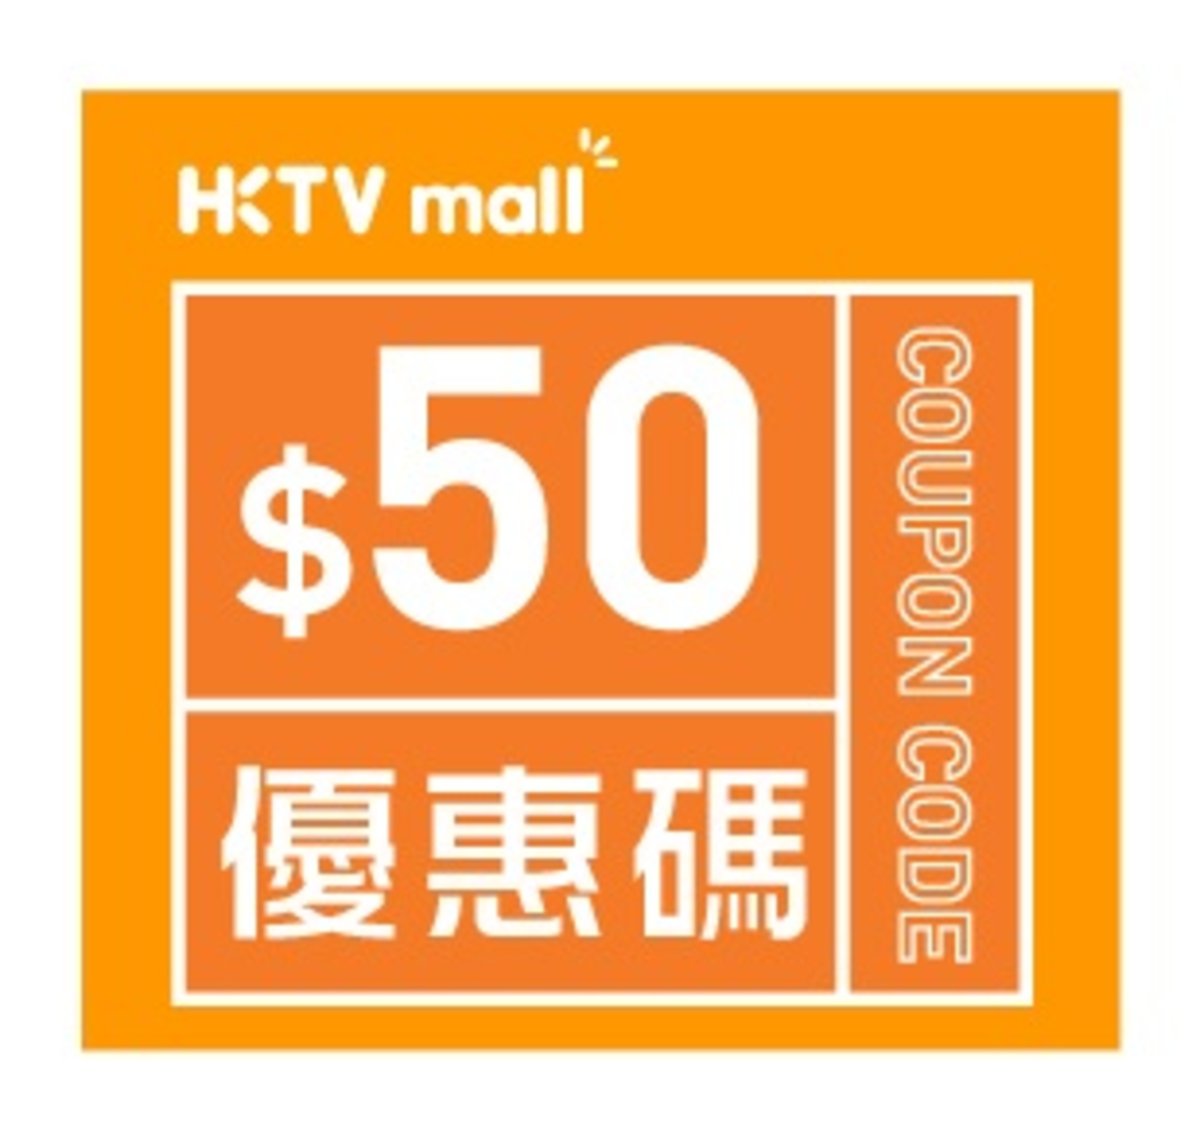 HKTVmall $50 Coupon Code [Valid: 2020.06.01 - 2020.12.31]